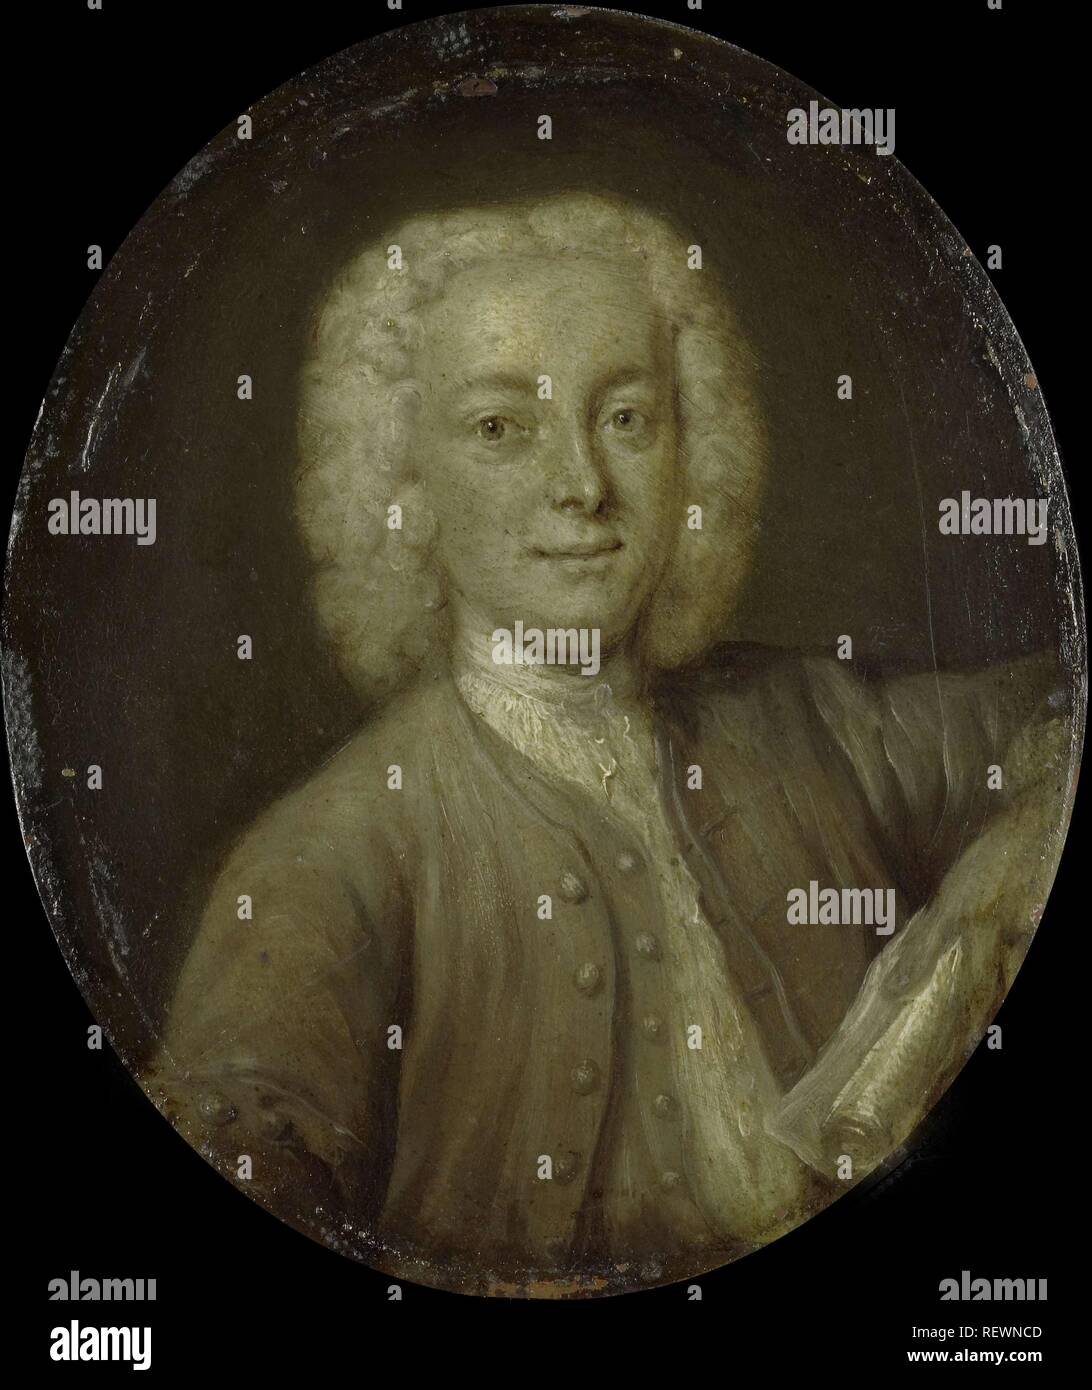 Portrait of Lucas Pater, Merchant and Poet in Amsterdam. Dating: 1732 - 1771. Measurements: h 10.9 cm × w 9.1 cm × d 0.1 cm. Museum: Rijksmuseum, Amsterdam. Author: Jan Maurits Quinkhard. Stock Photo